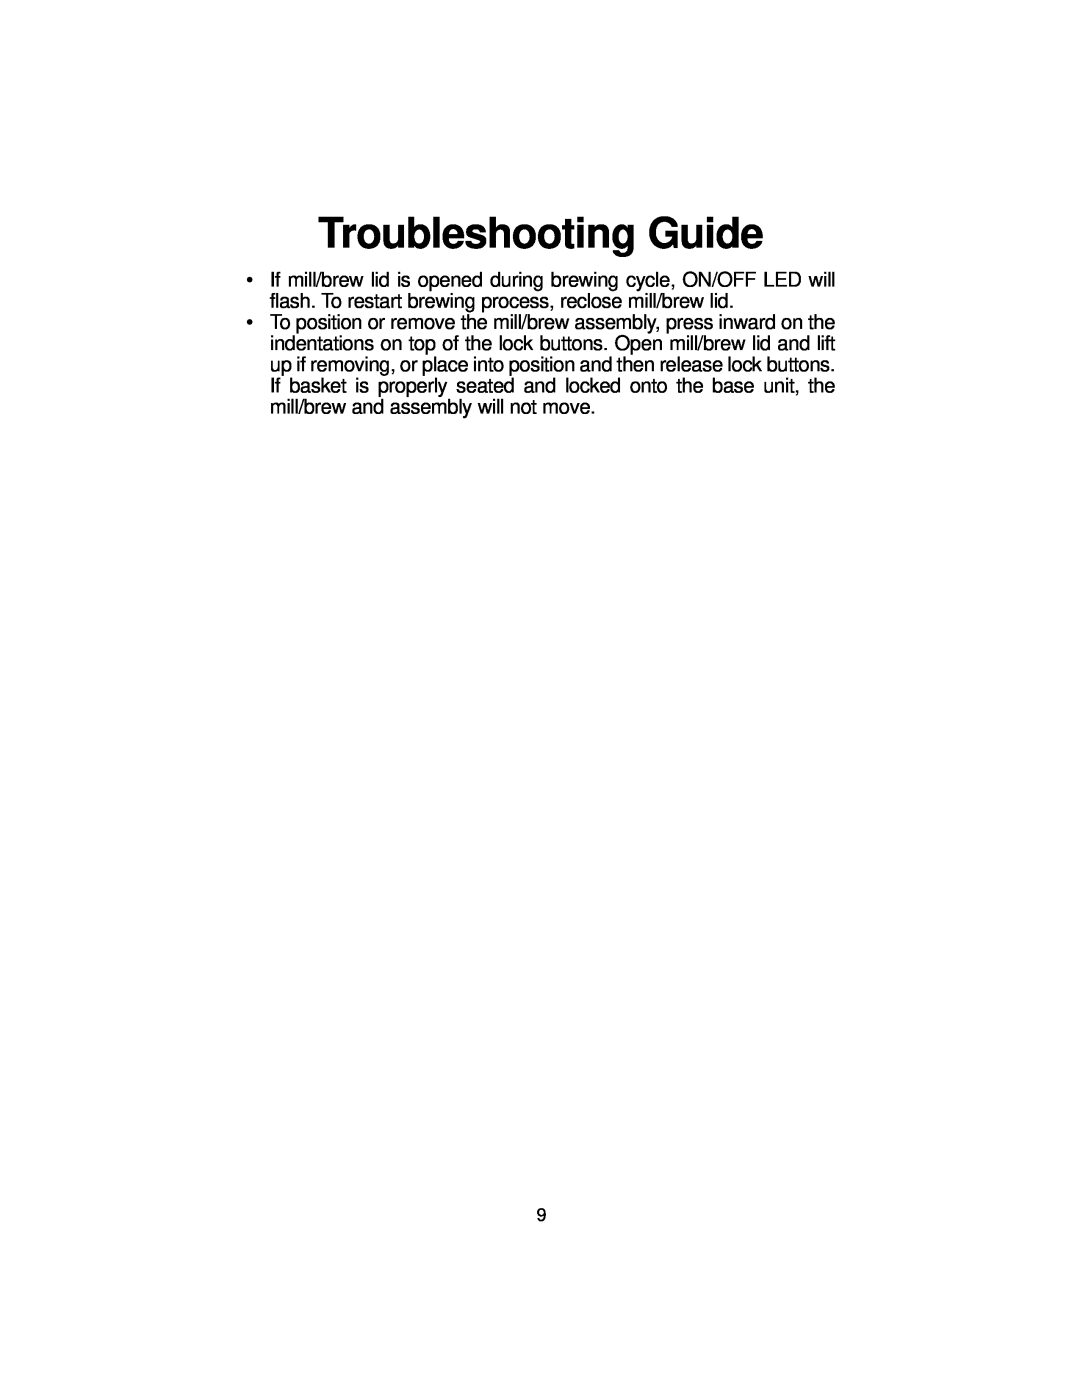 Melitta MB80 manual Troubleshooting Guide 